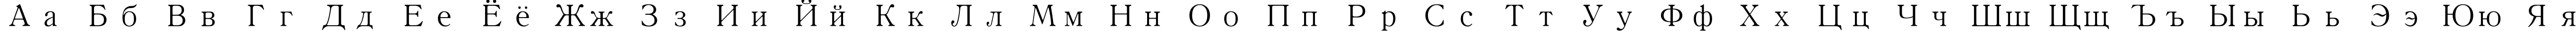 Пример написания русского алфавита шрифтом MS Mincho